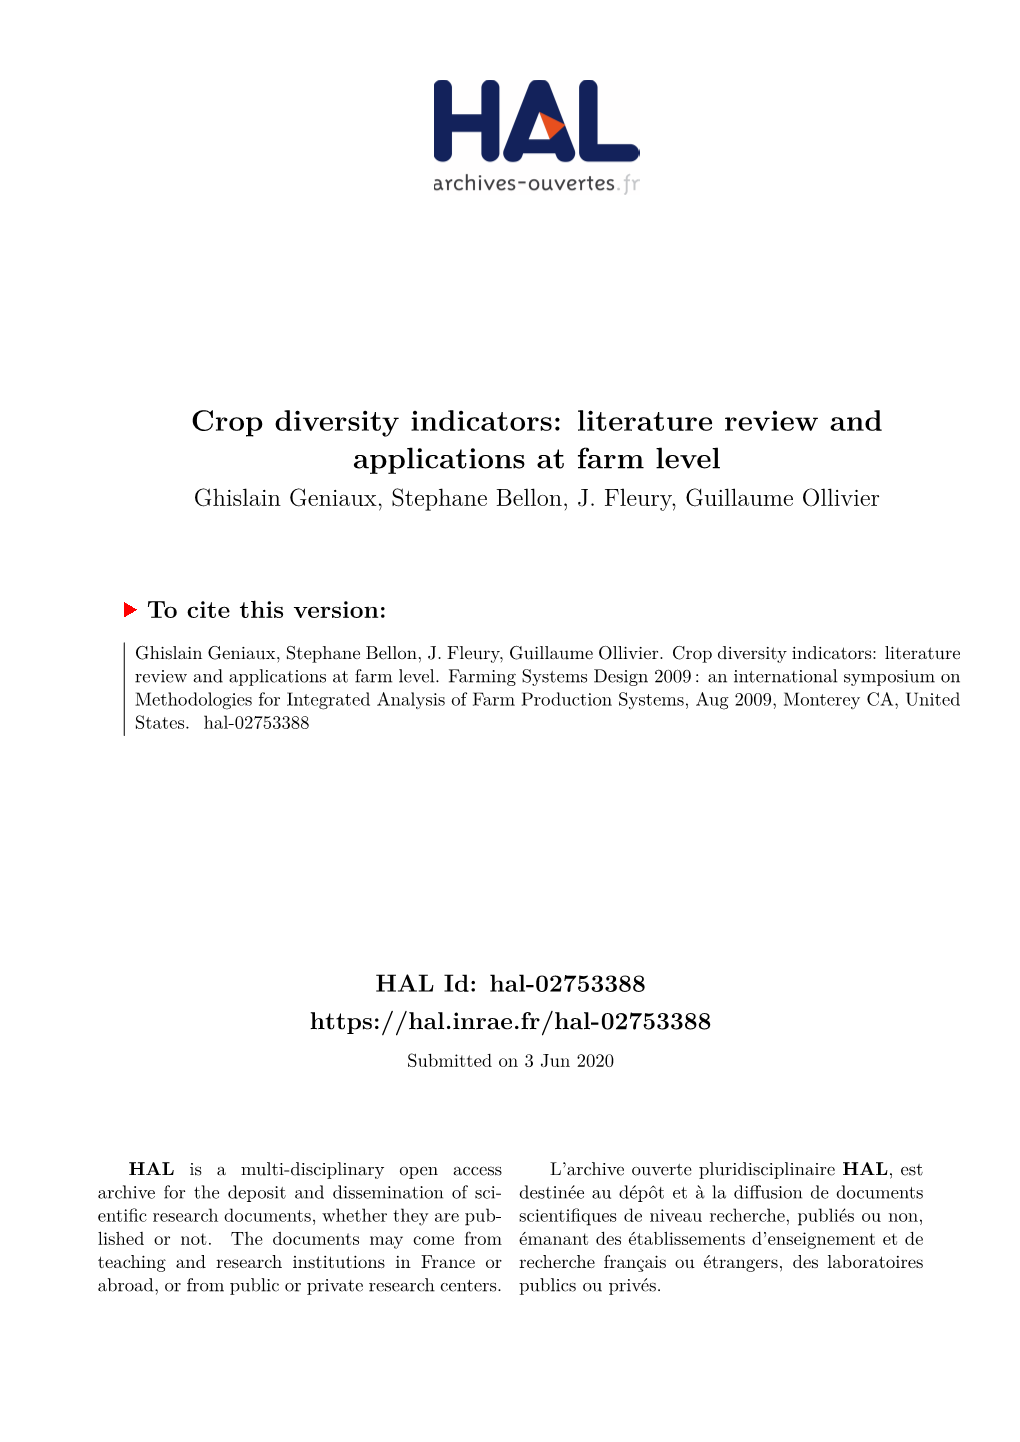 Crop Diversity Indicators: Literature Review and Applications at Farm Level Ghislain Geniaux, Stephane Bellon, J